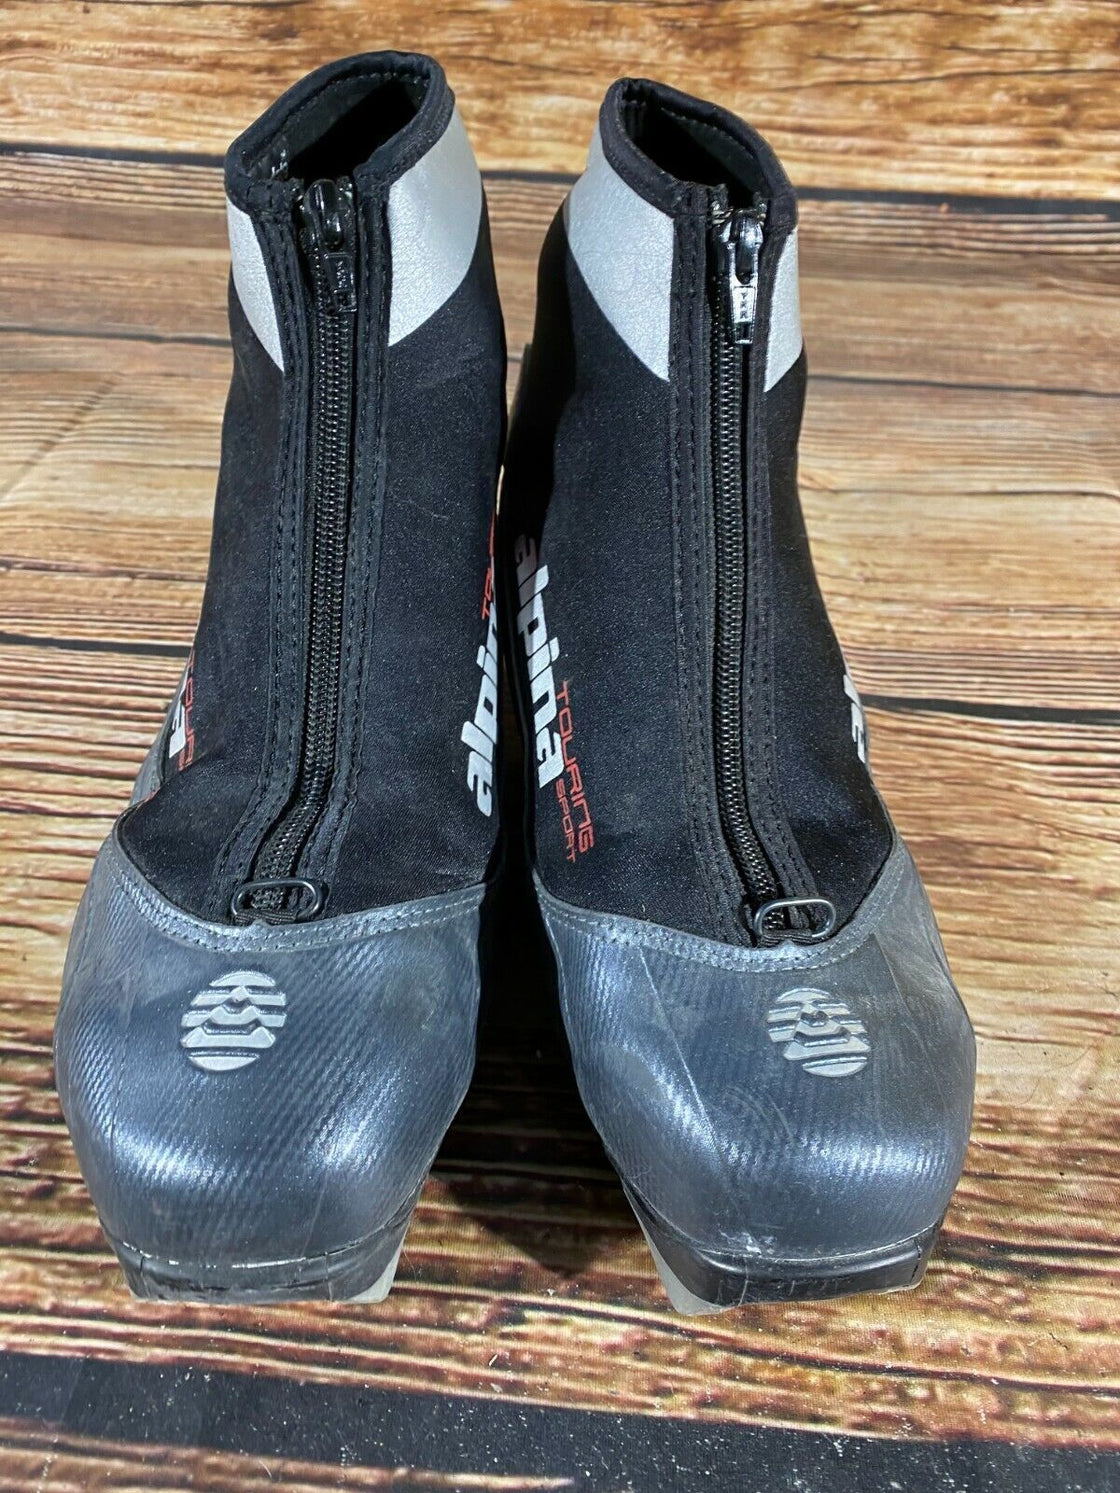 Alpina ST10 Nordic Cross Country Ski Boots Size EU41 US8 NNN bindings